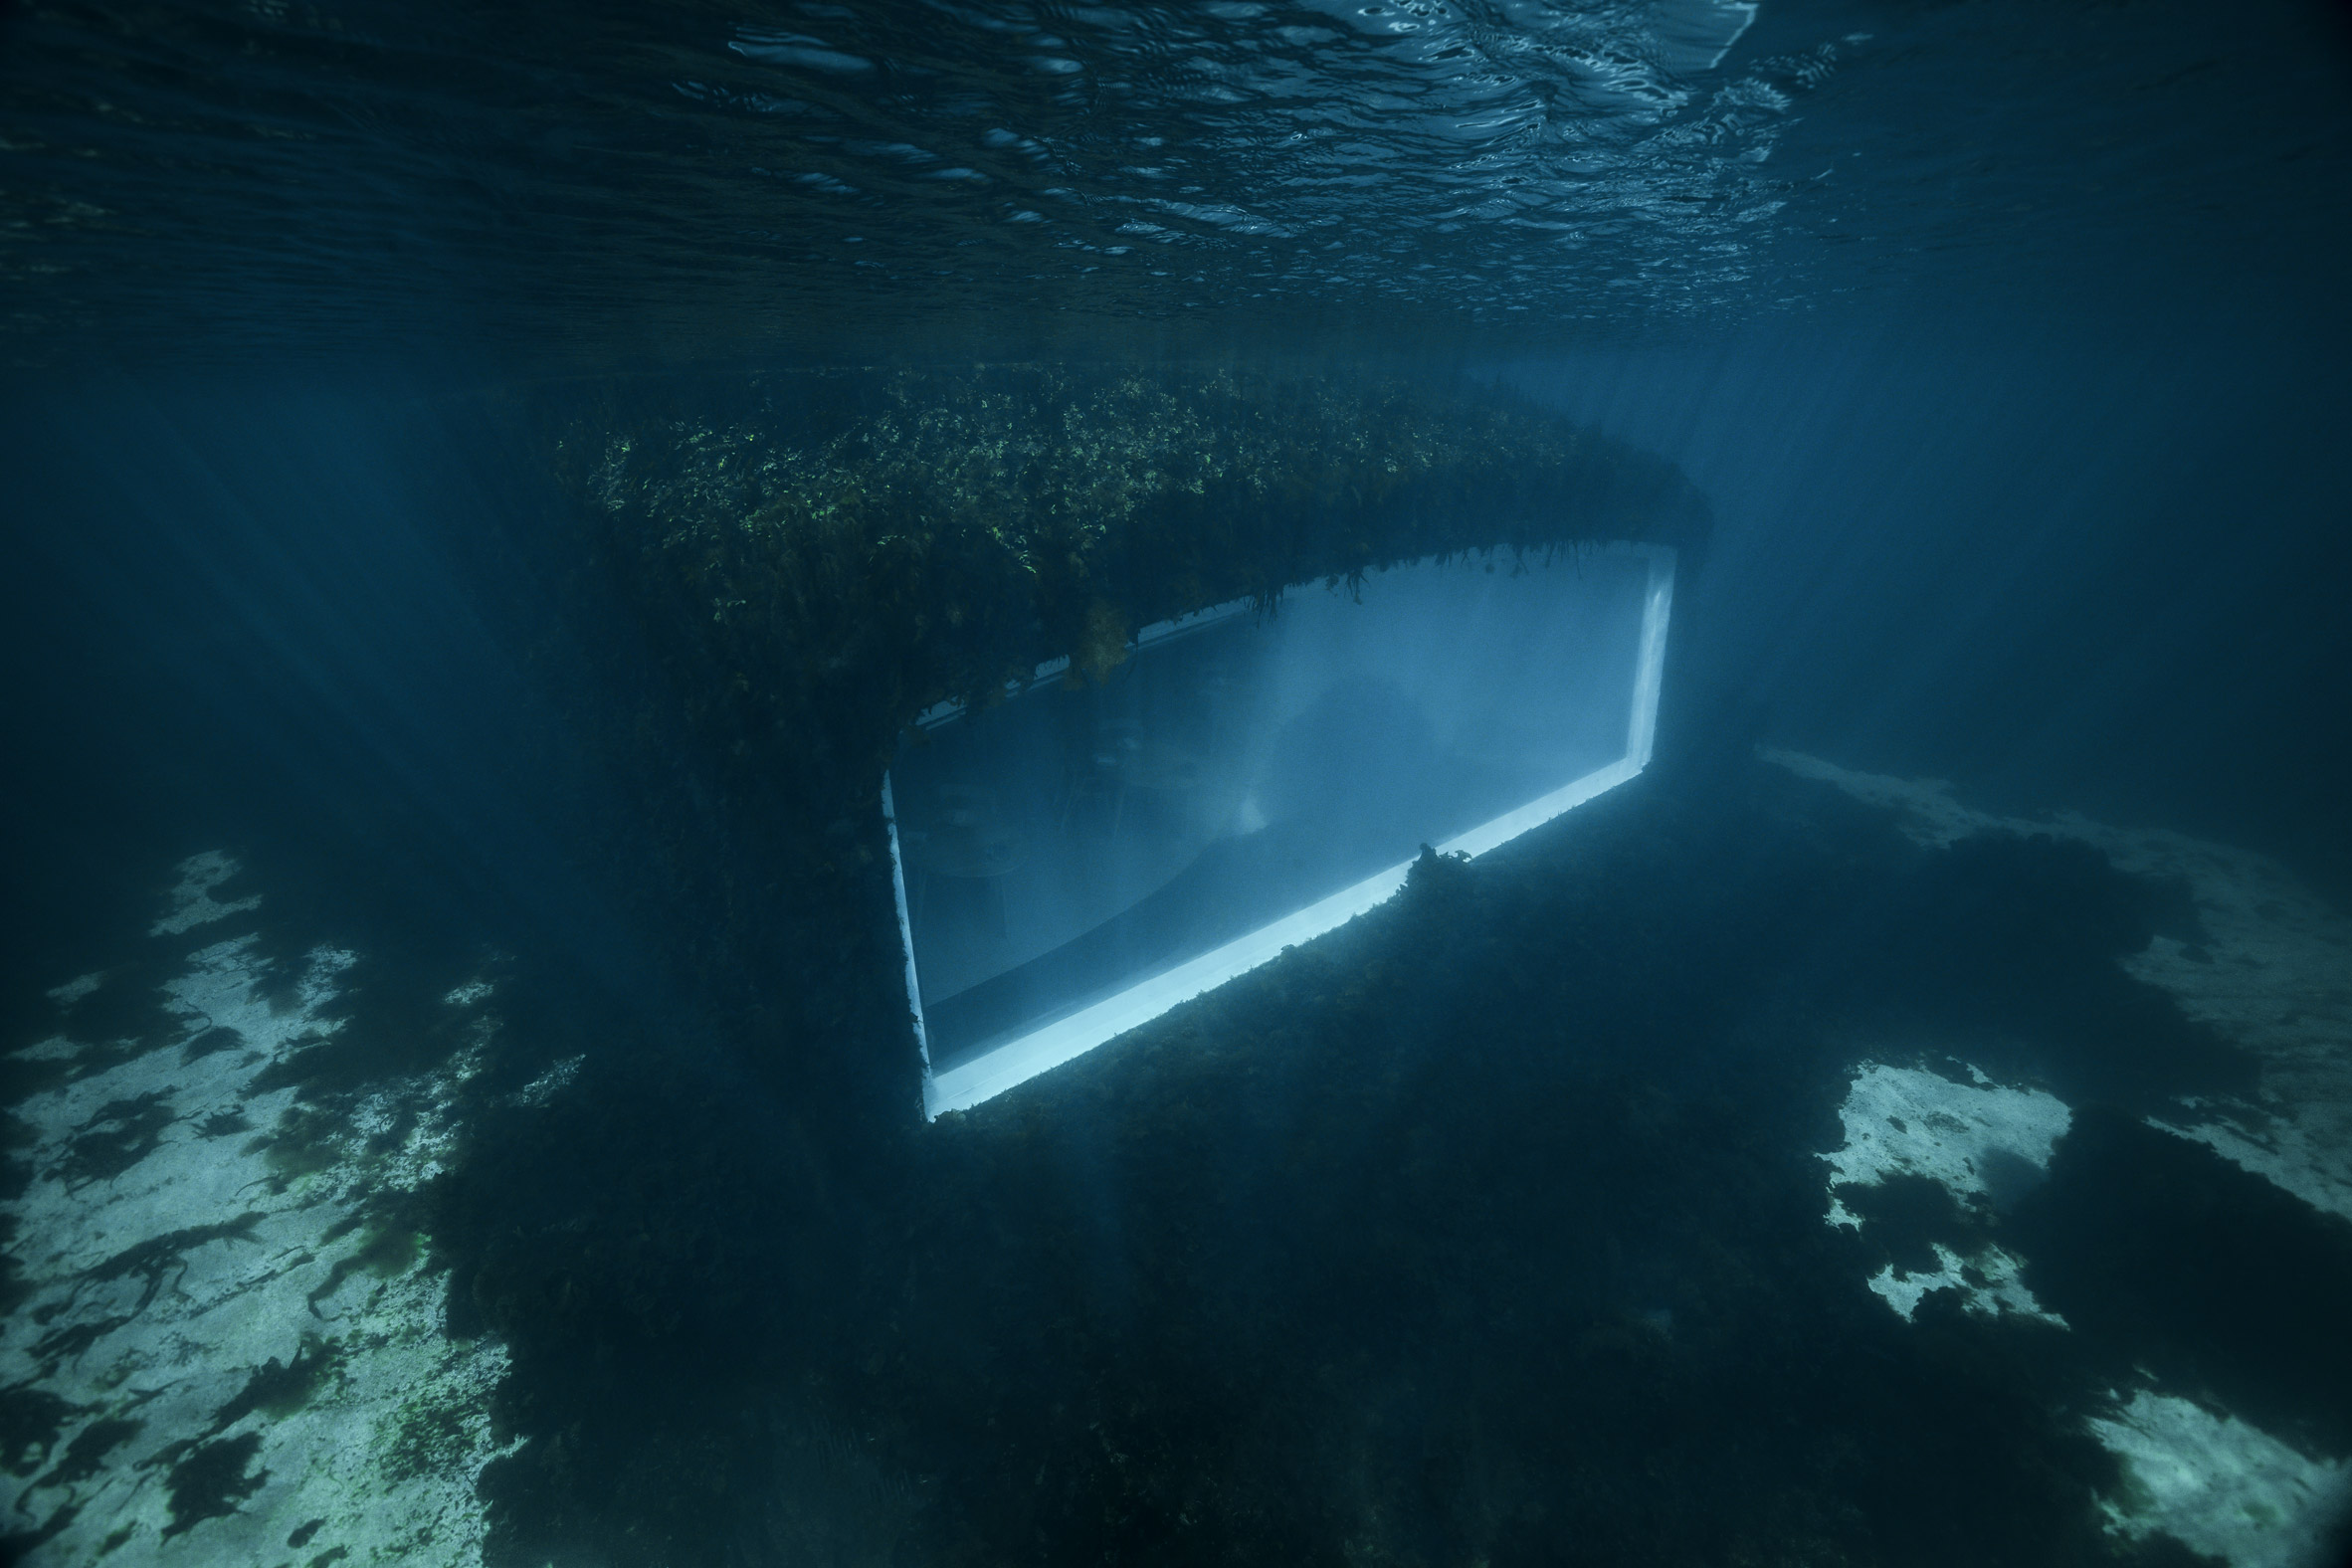 Image of Snøhetta's Under restaurant covered in marine life